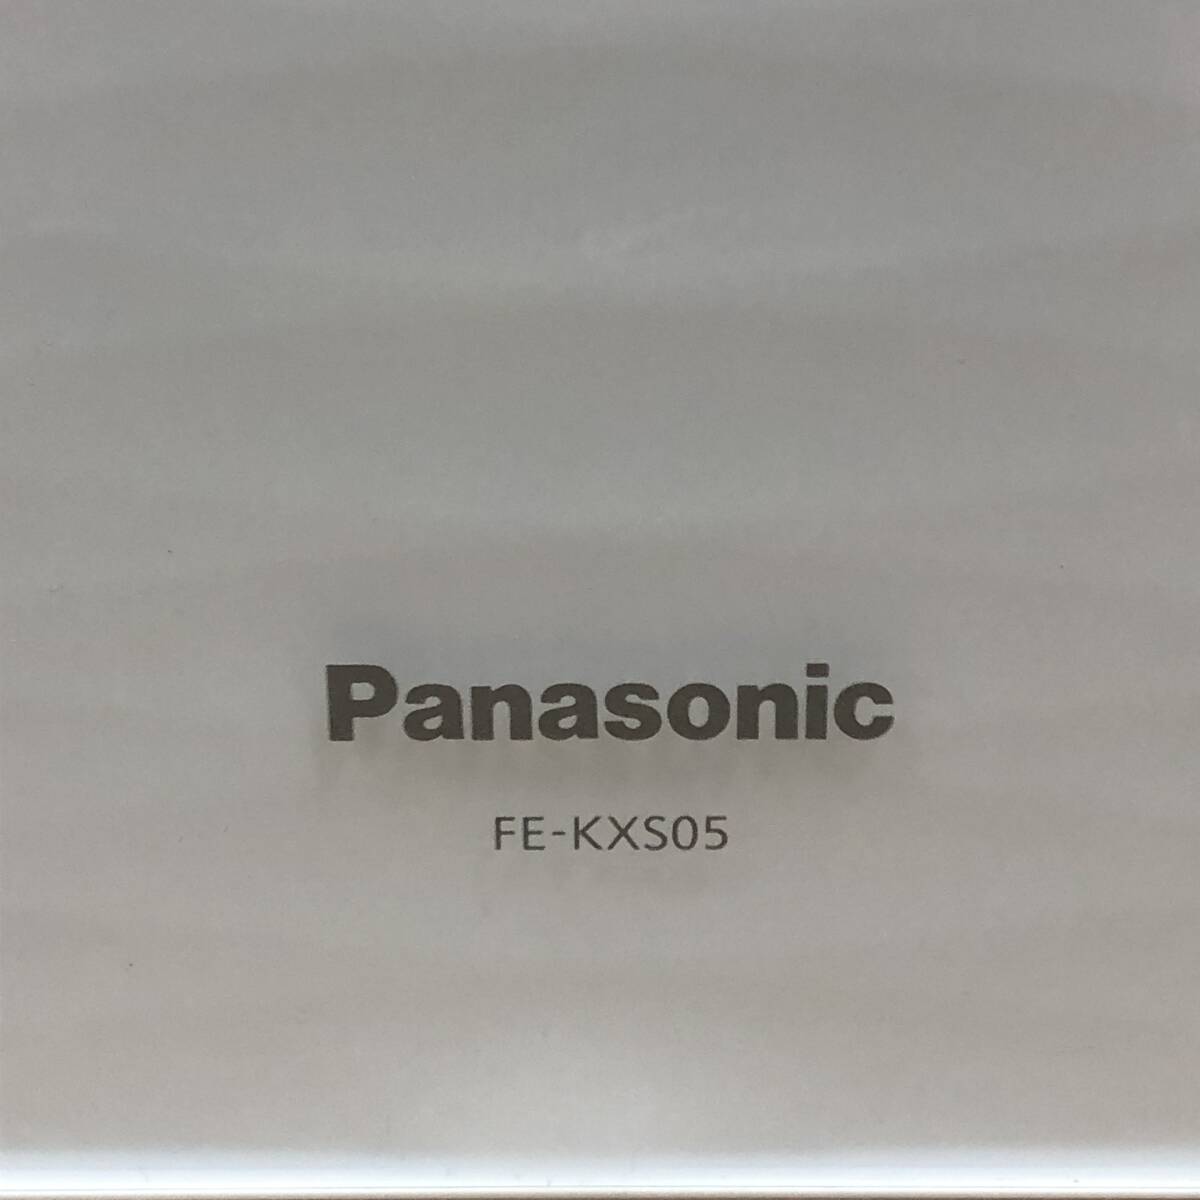 *[Panasonic/ Panasonic ]nanoe/ nano i- испарительный увлажнитель FE-KXS05 2019 год производства *23170